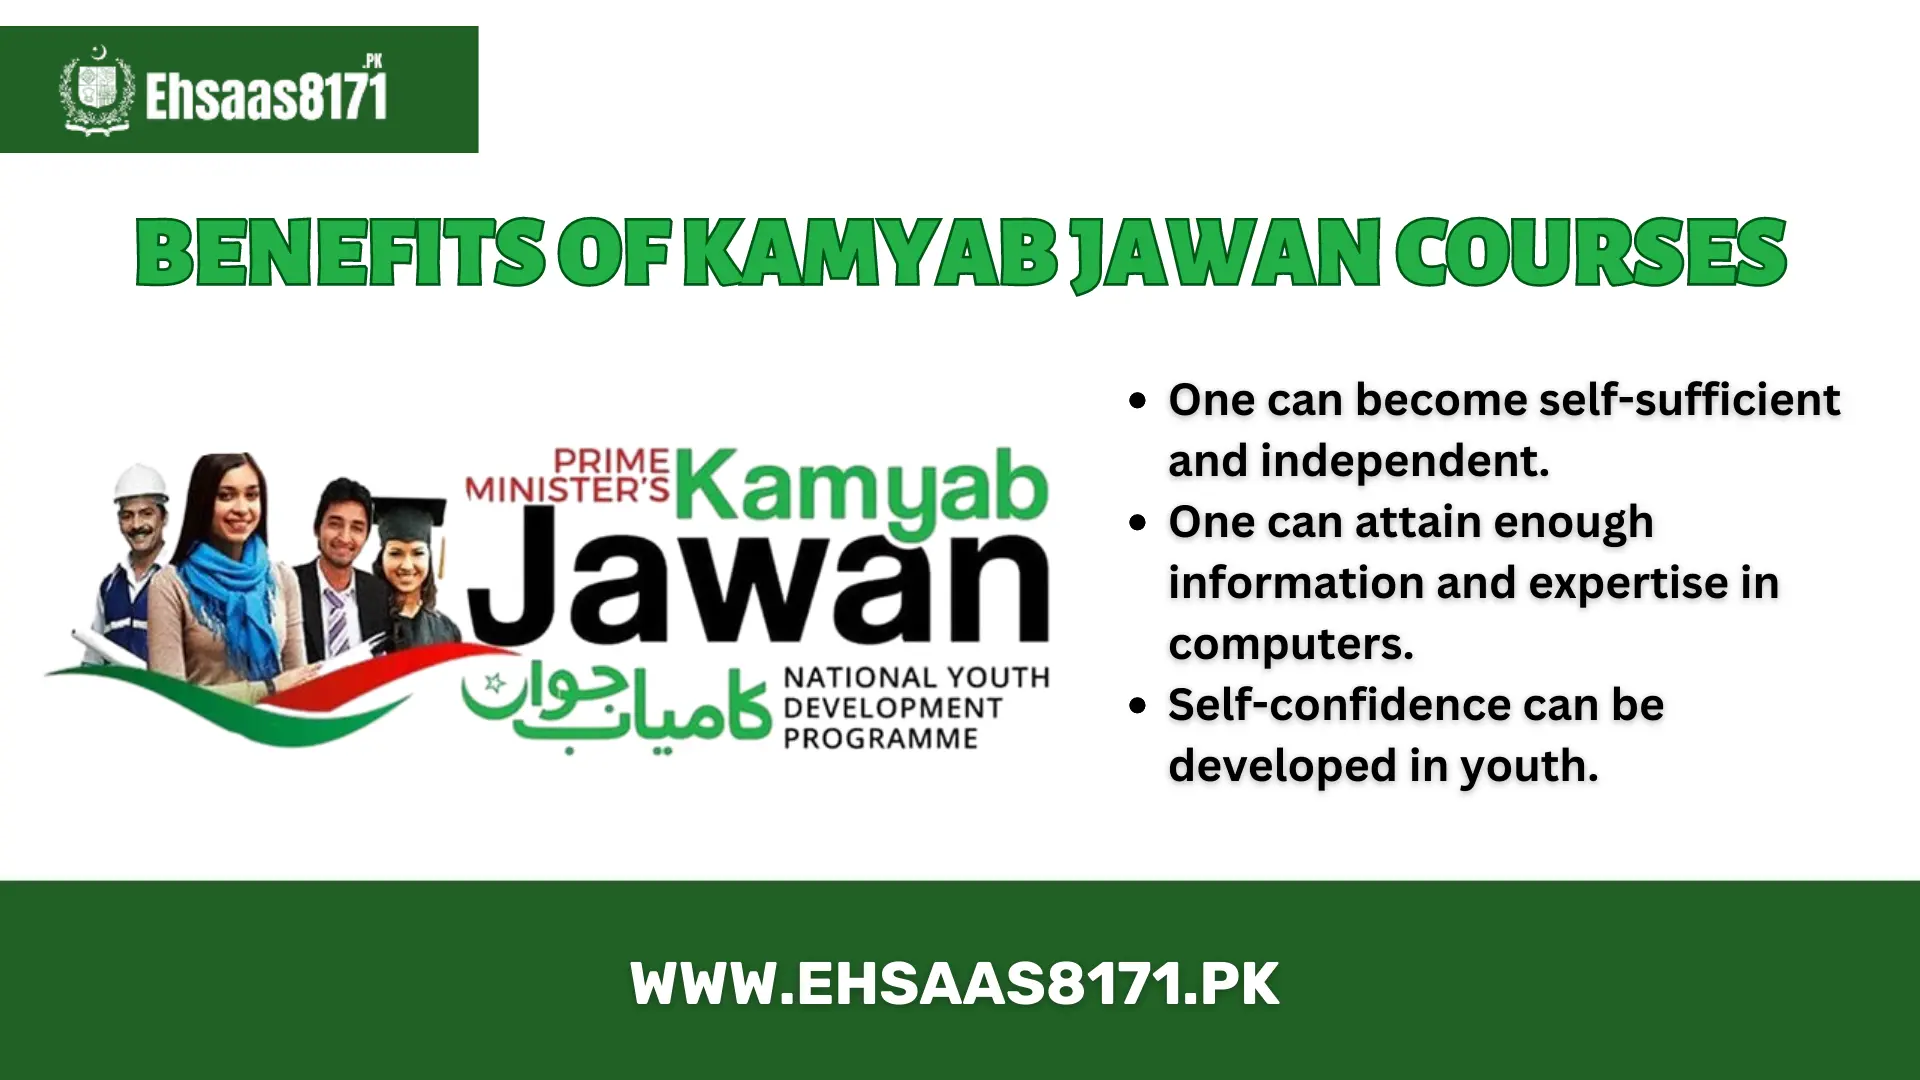 Benefits of kamyab jawan courses